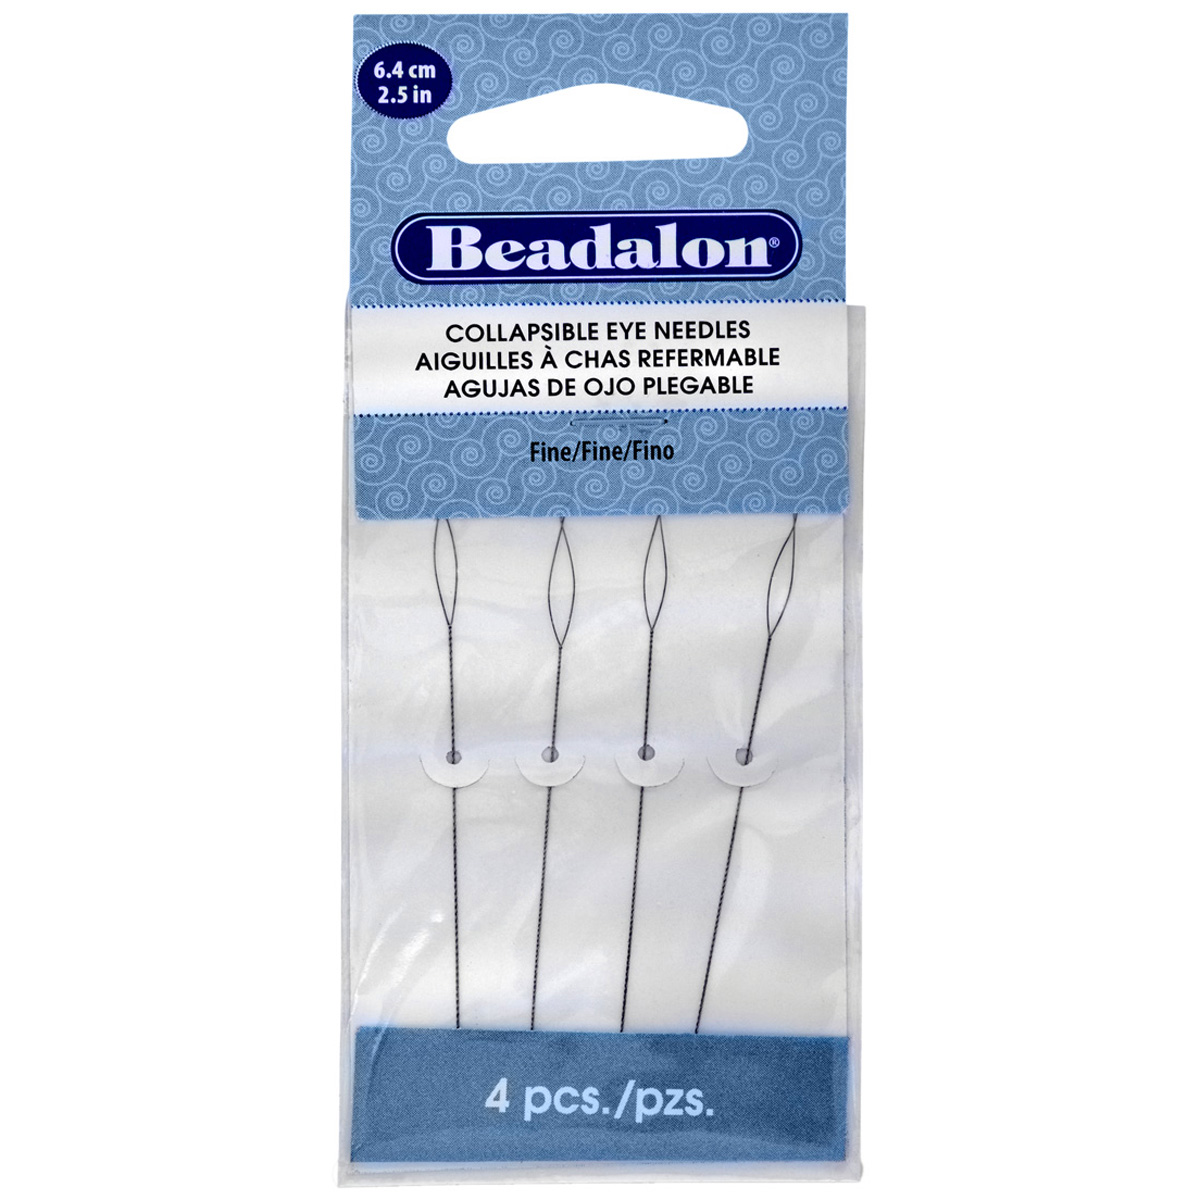 Where To Buy Beadalon Collapsible Eye Needles 37